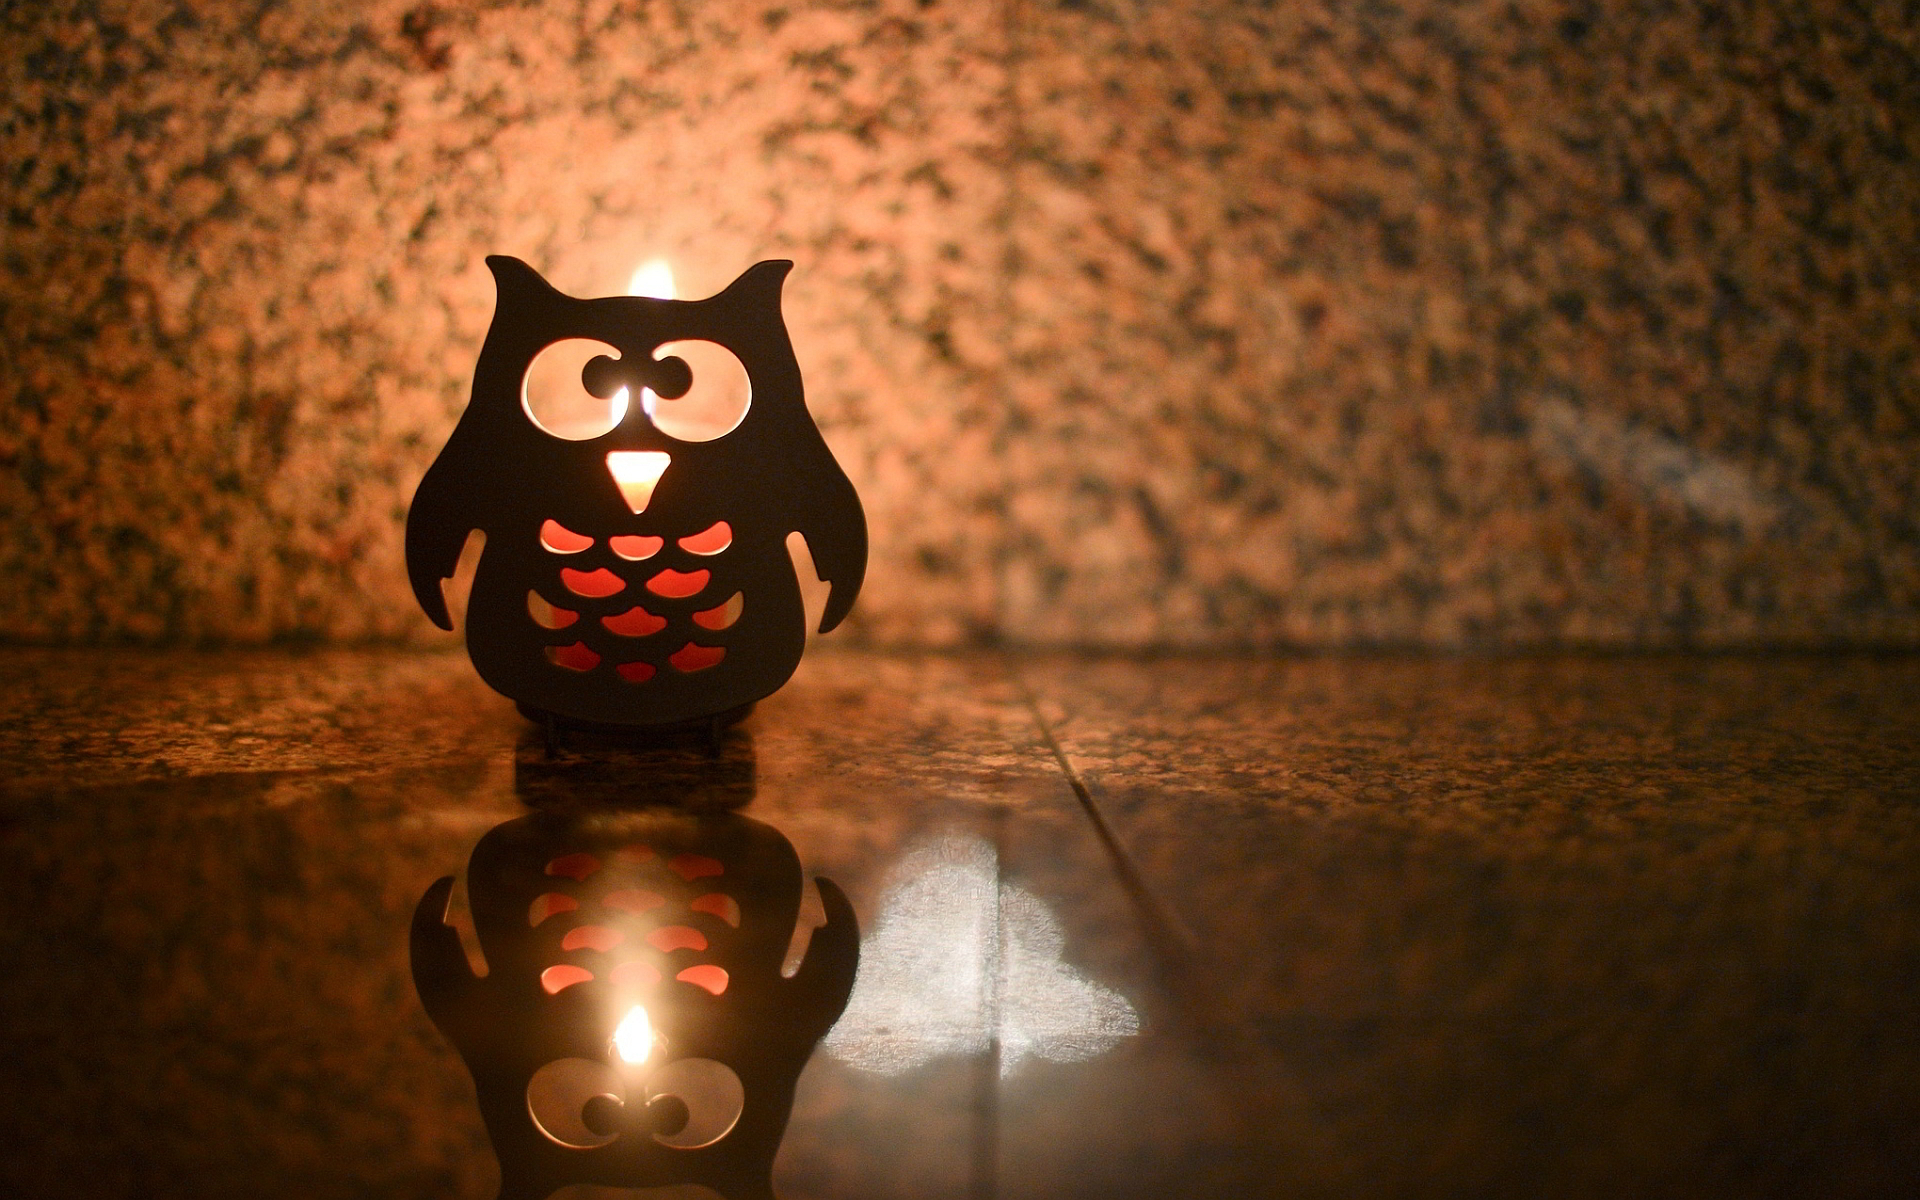 Owl candle lantern